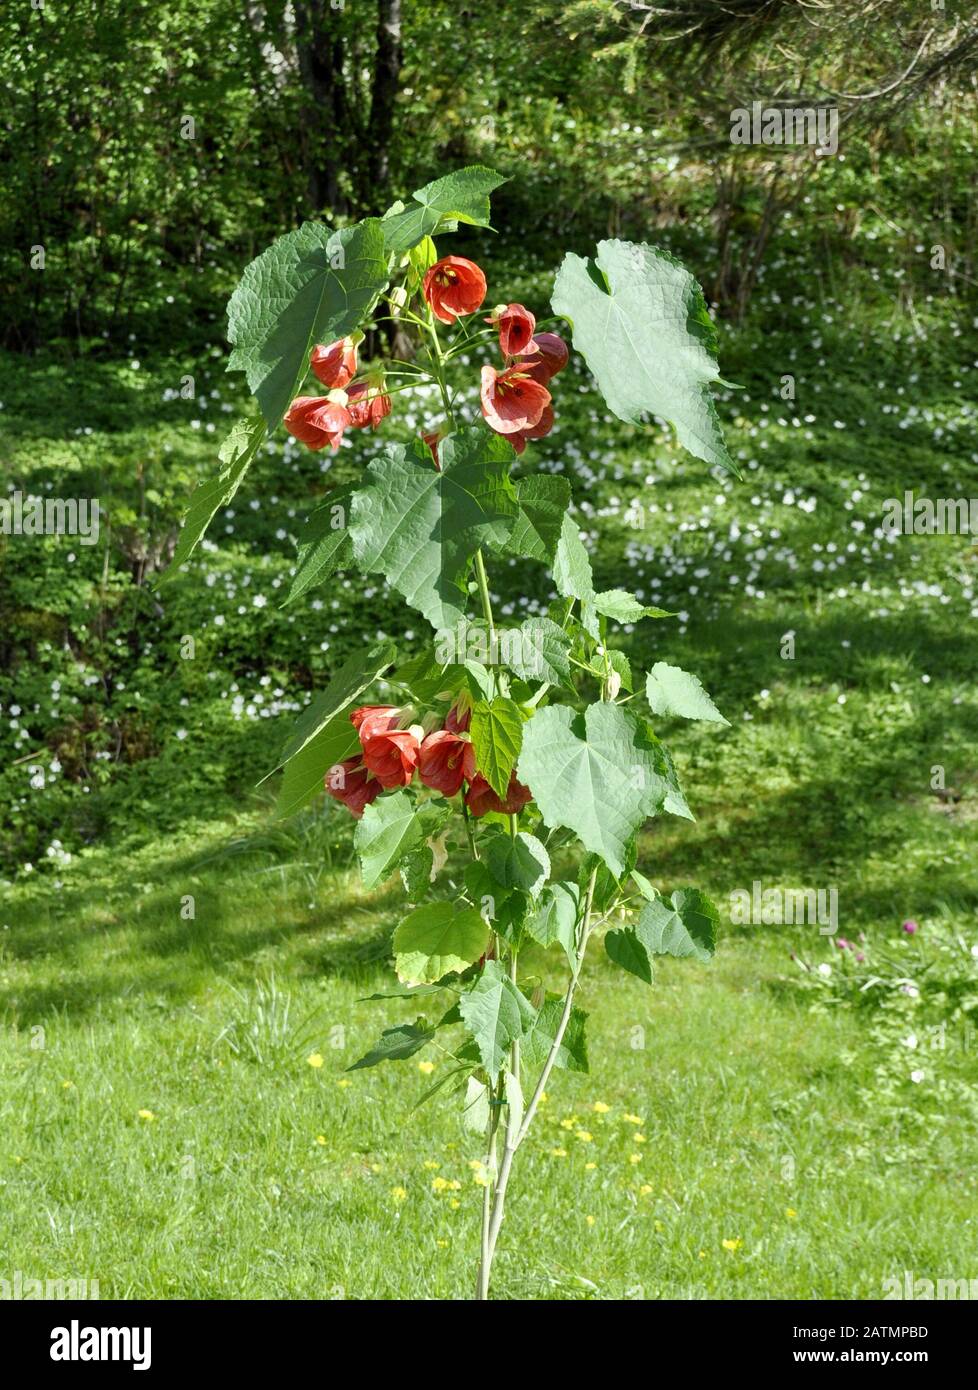 Abutilon shrub with red flowers Stock Photo